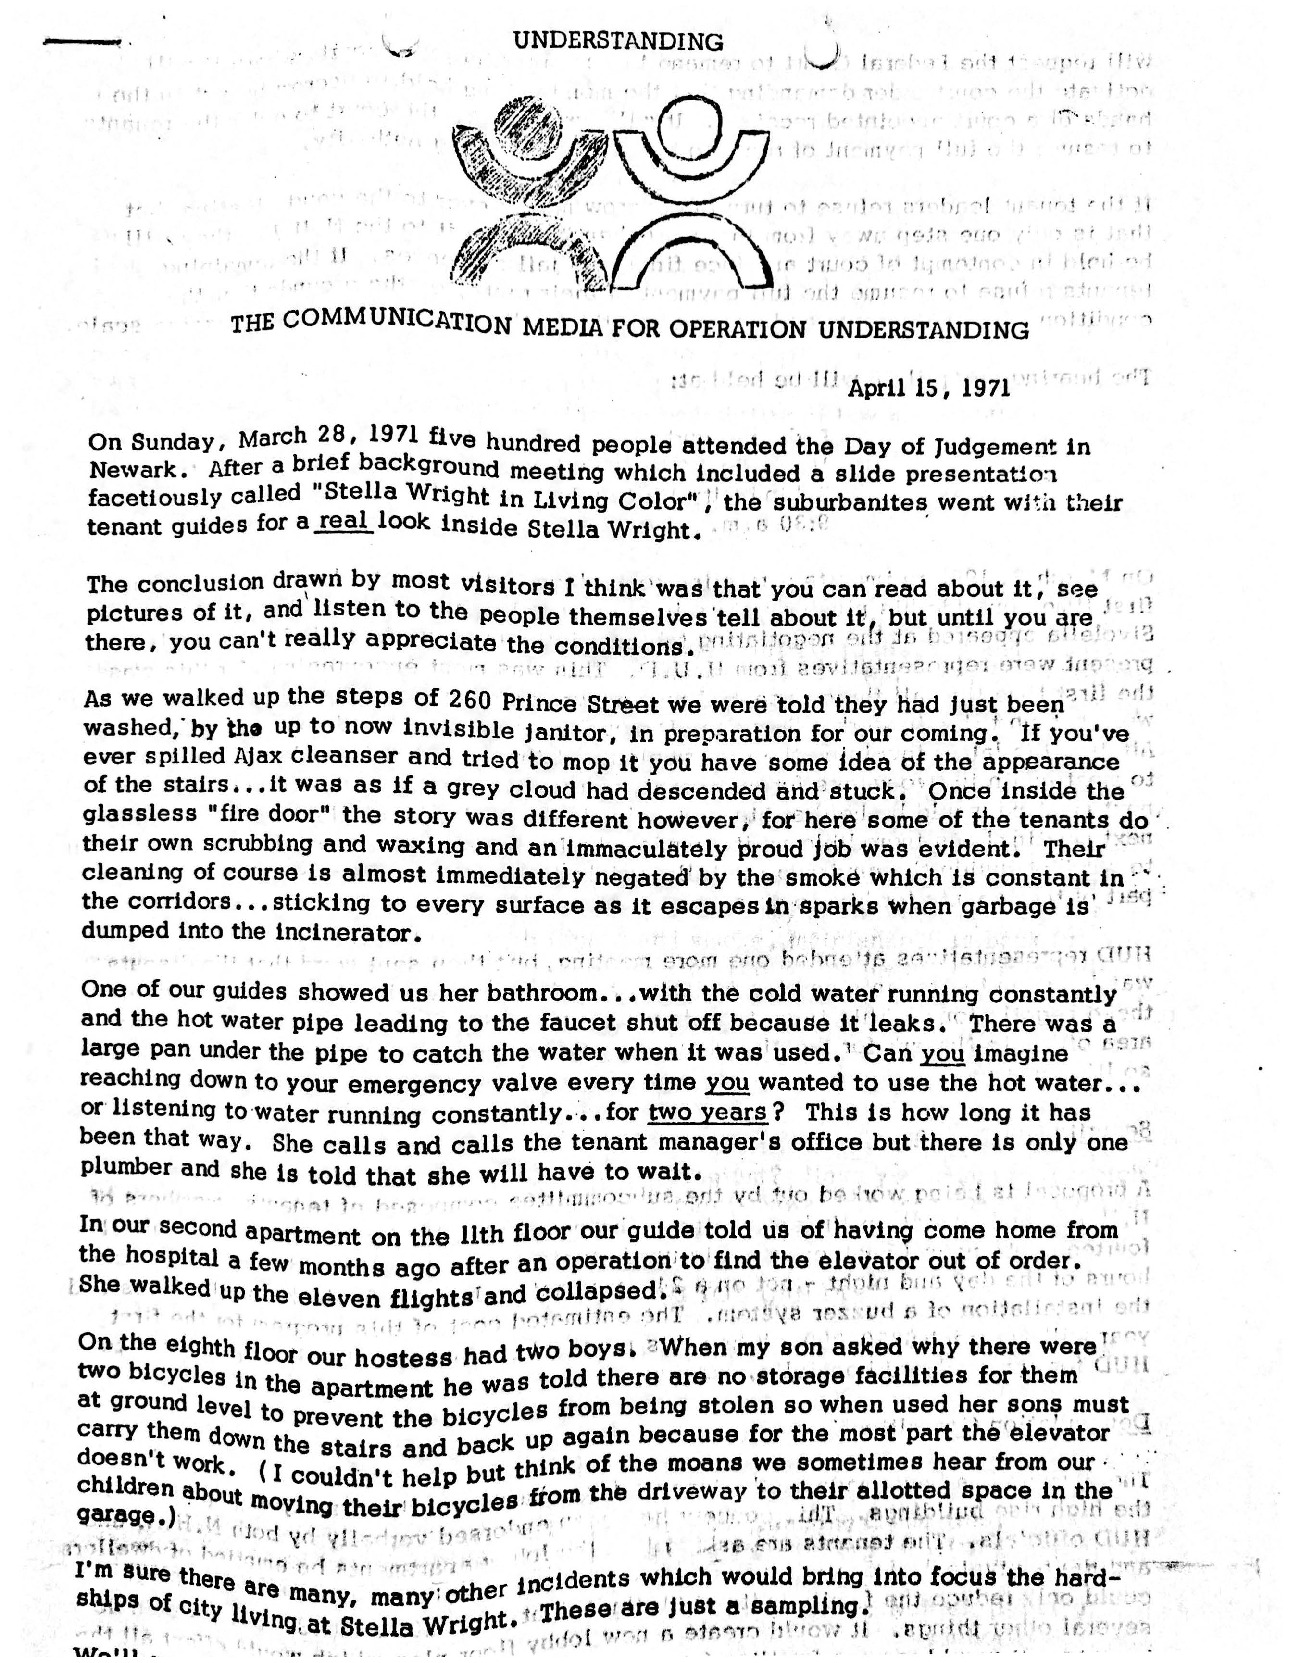 Operation Understanding Newsletter (1971)